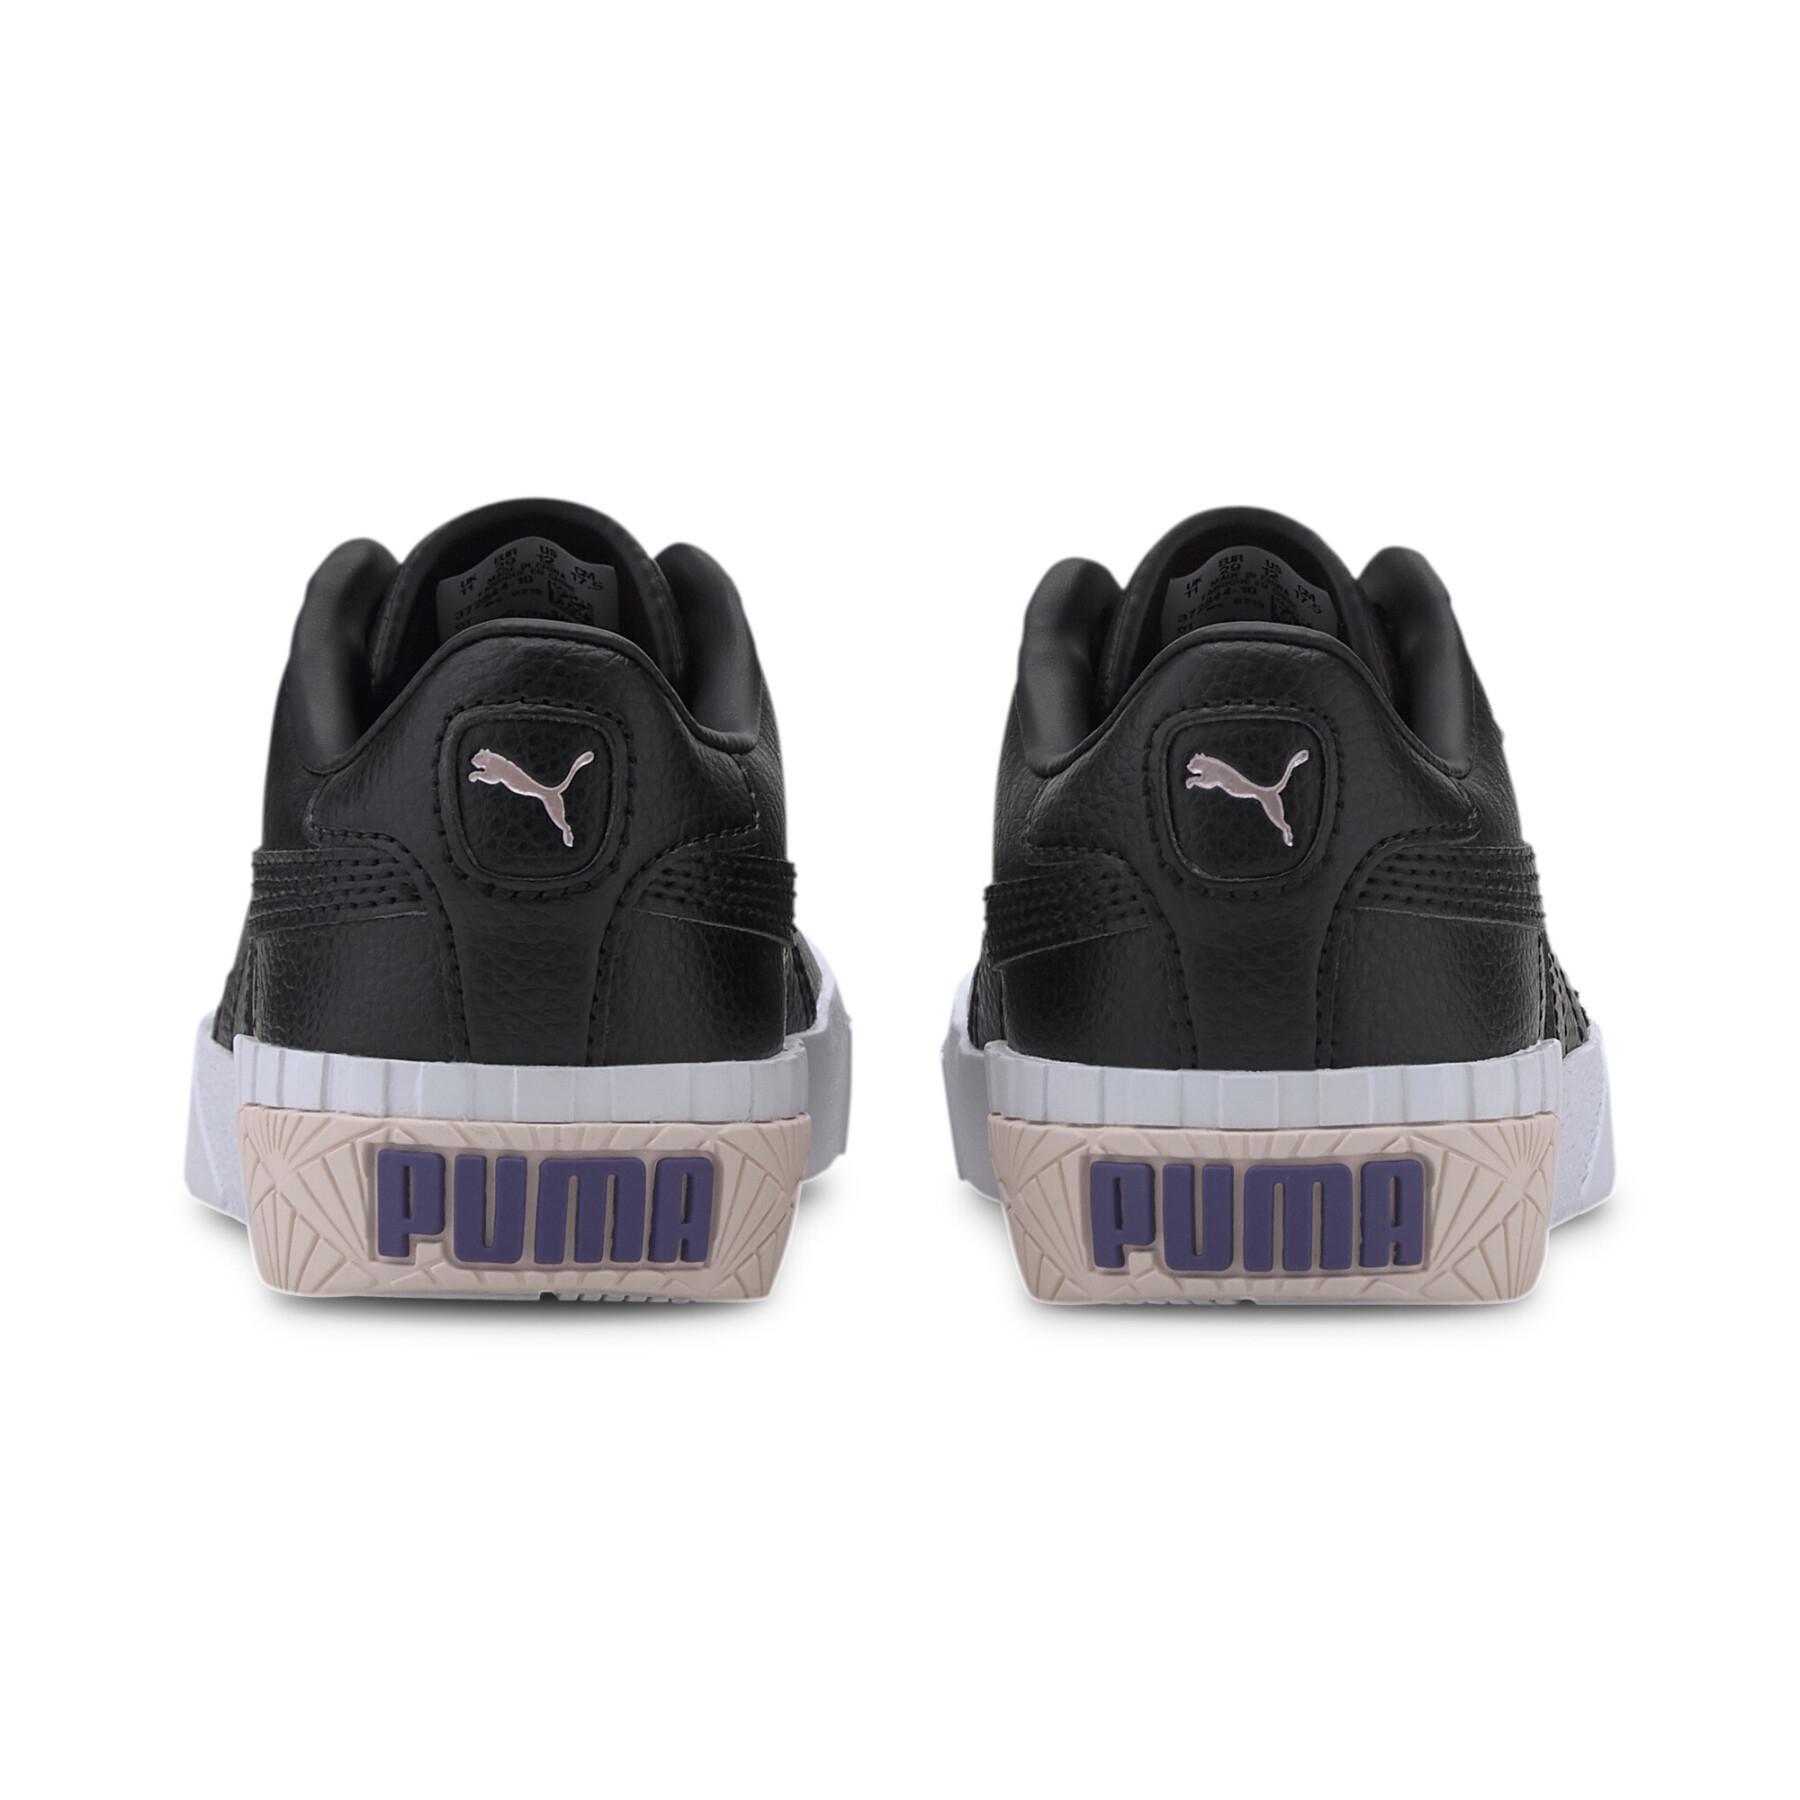 Children's sneakers Puma Cali ps